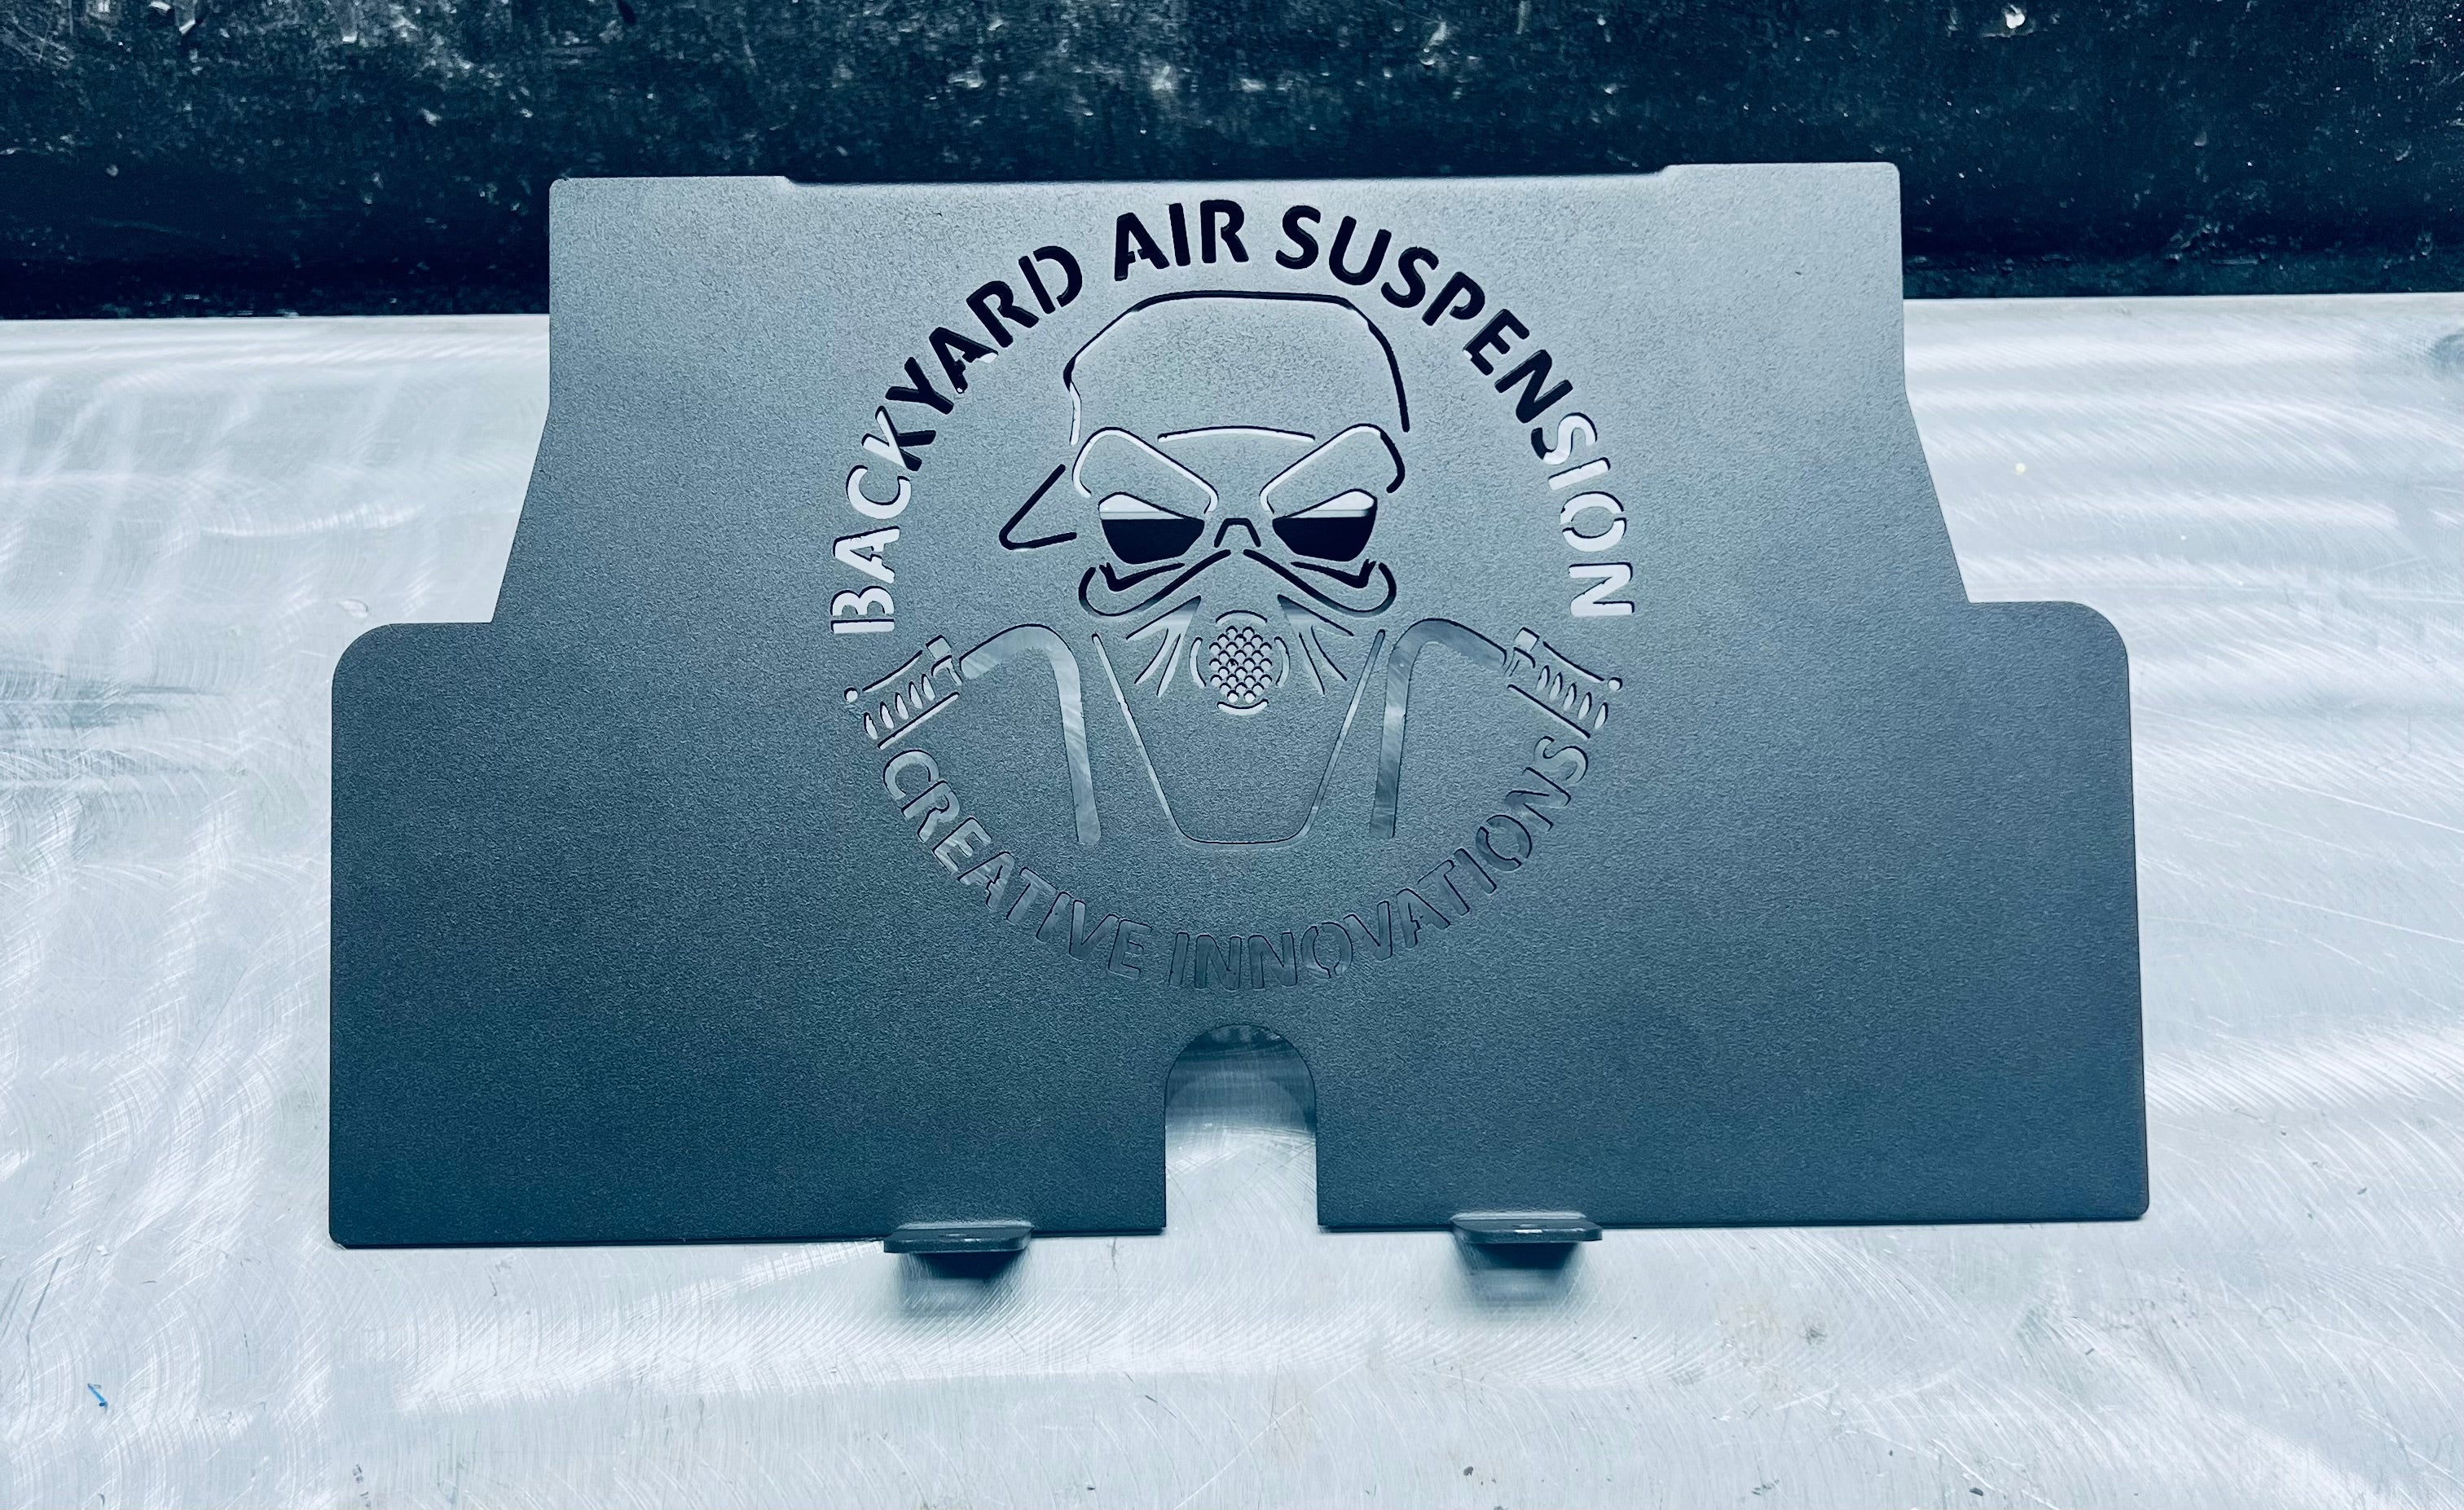 Harley Road Glide Amp Rack - Backyard Air Suspension & Innovations, LLC.